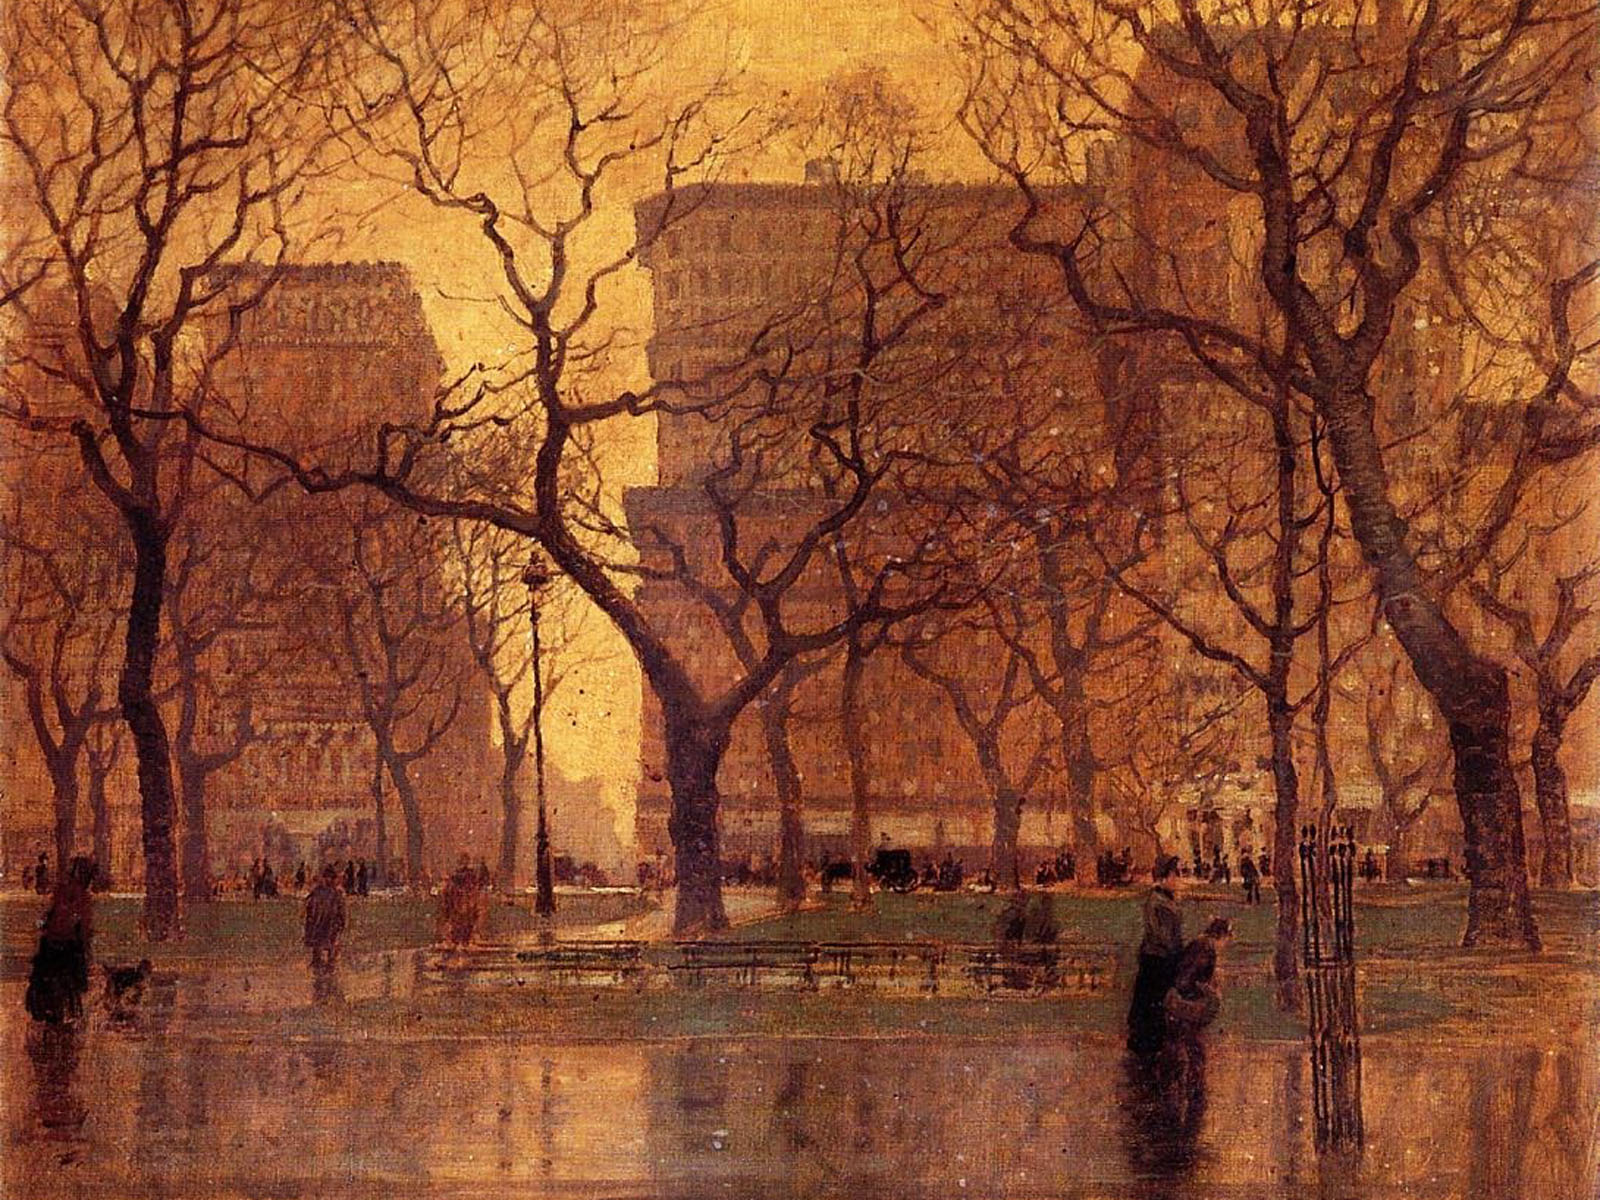 After the Rain, Paul Cornoyer (c. 1900).